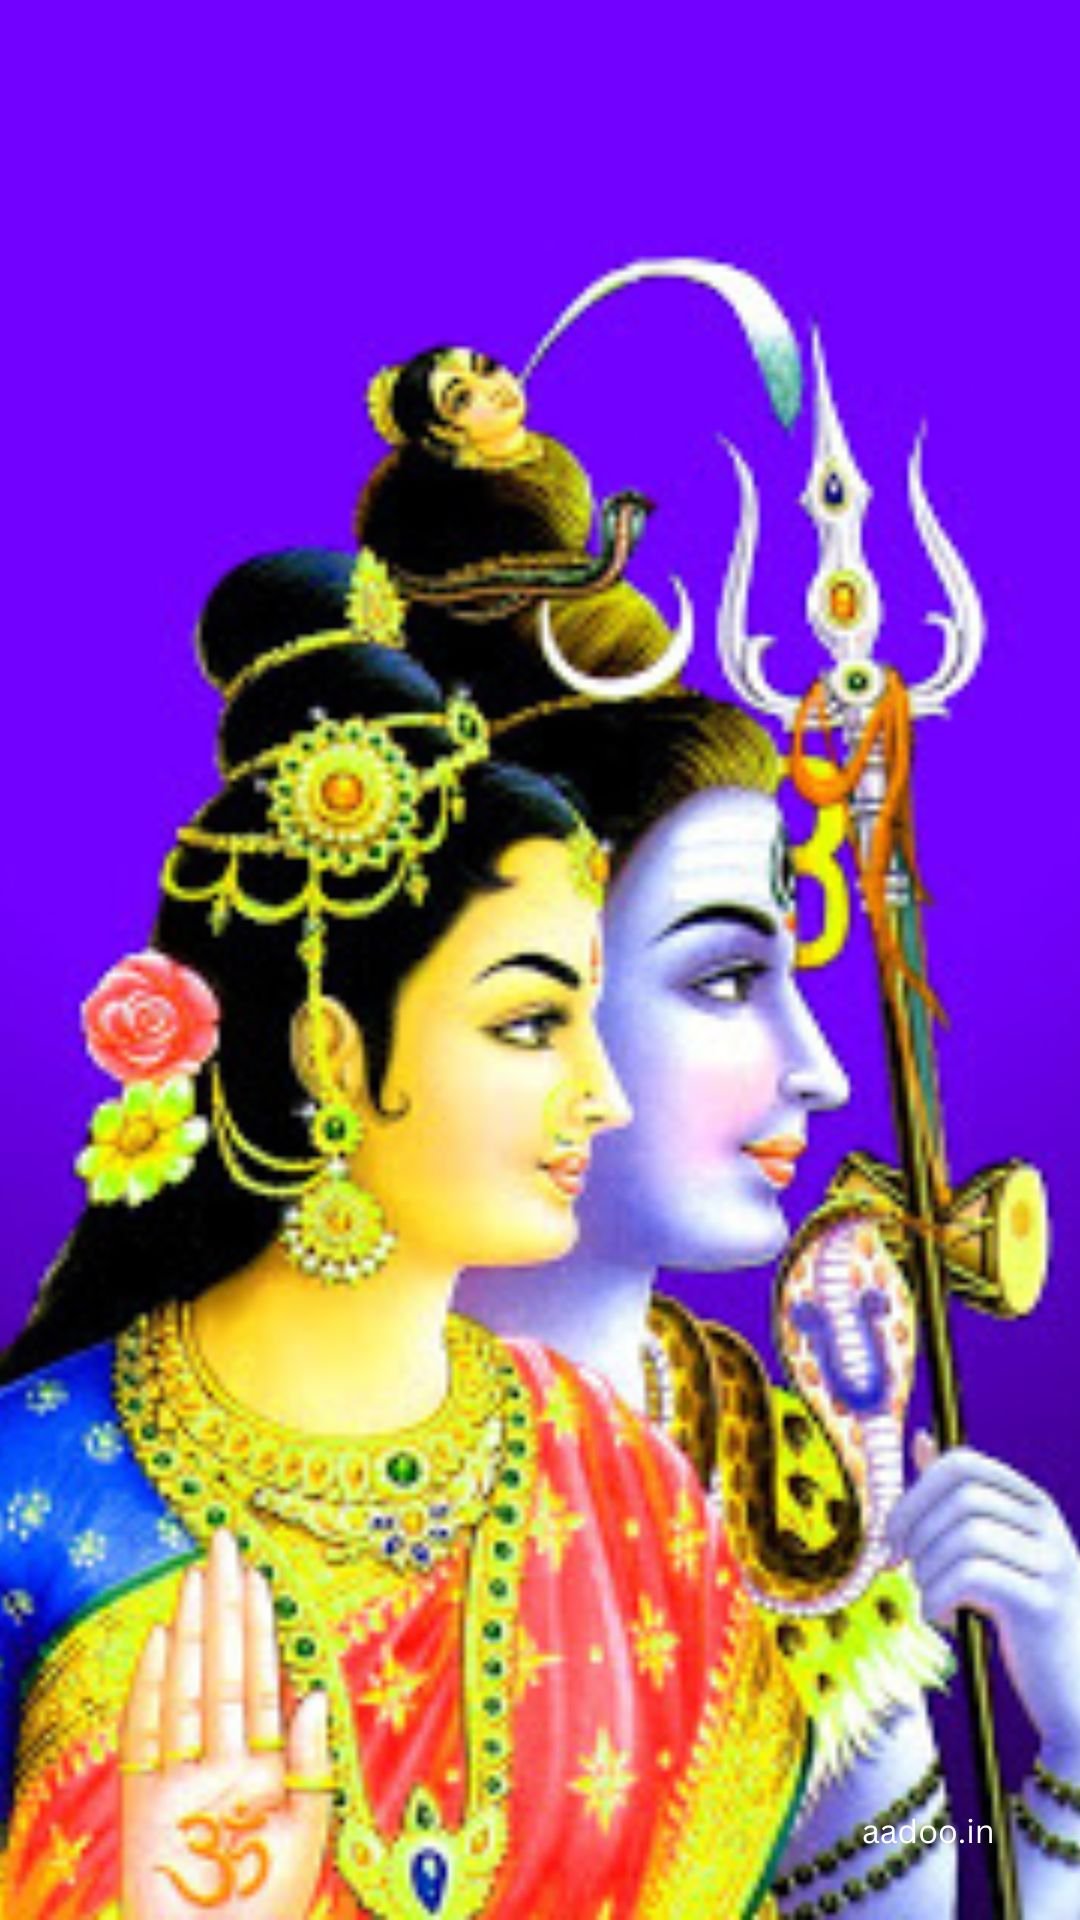 Shiv Parvati Images, Shiv Parvati Images HD Wallpaper, Shiv Parvati Images Full Screen, Shiv Parvati Love Images, Shiv Parvati Image HD, aadoo.in